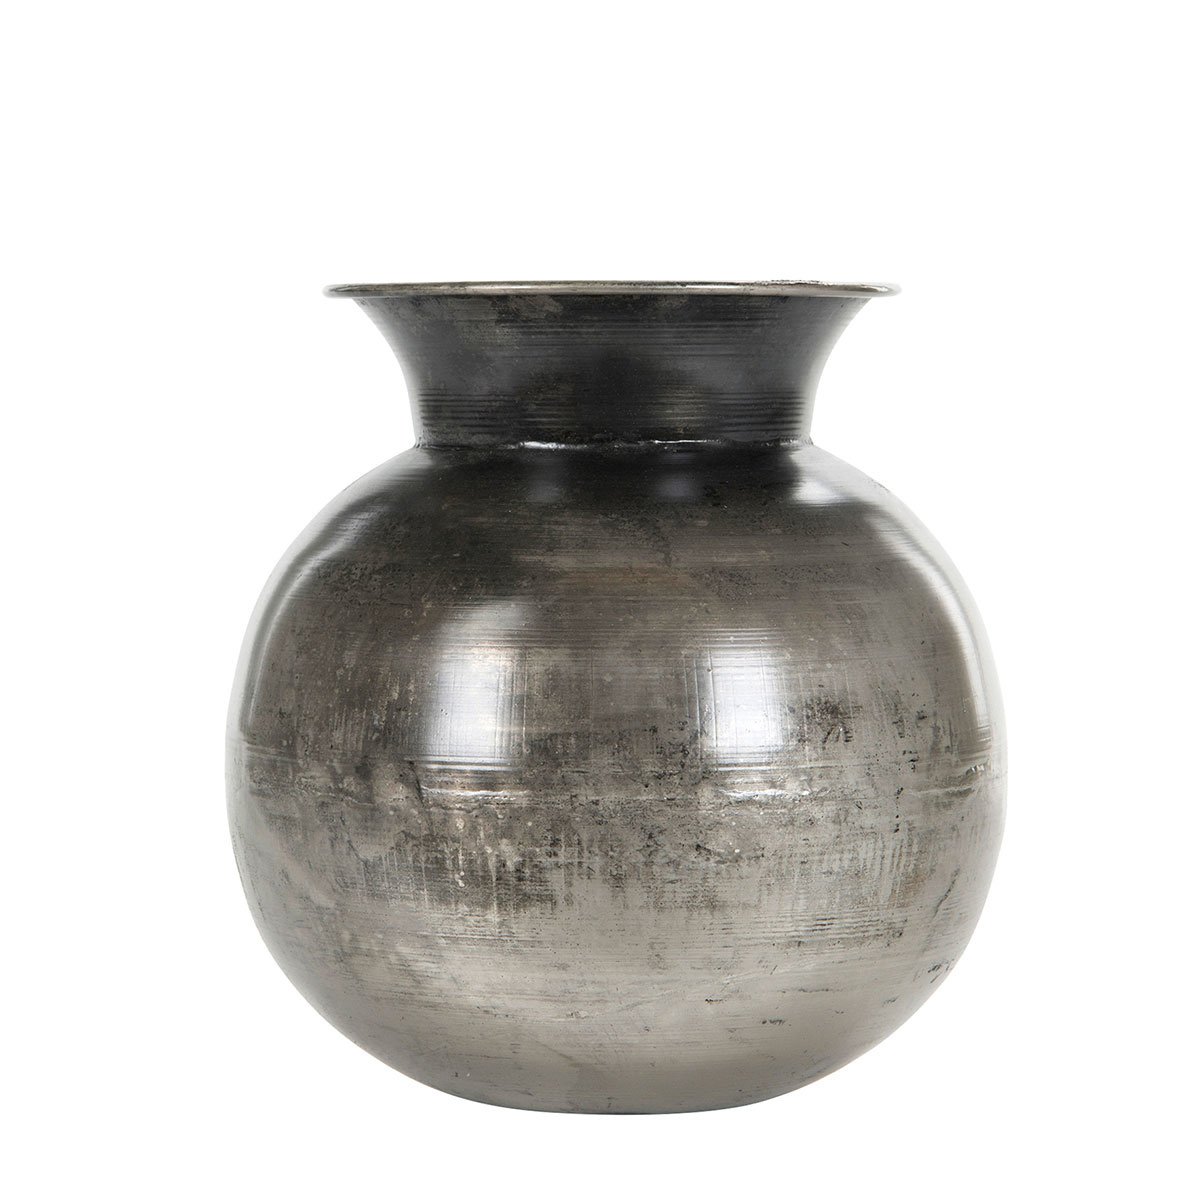 Mellemstor rund vase med tinlook 
Ø: 21,5 cm H: 21,5 cm